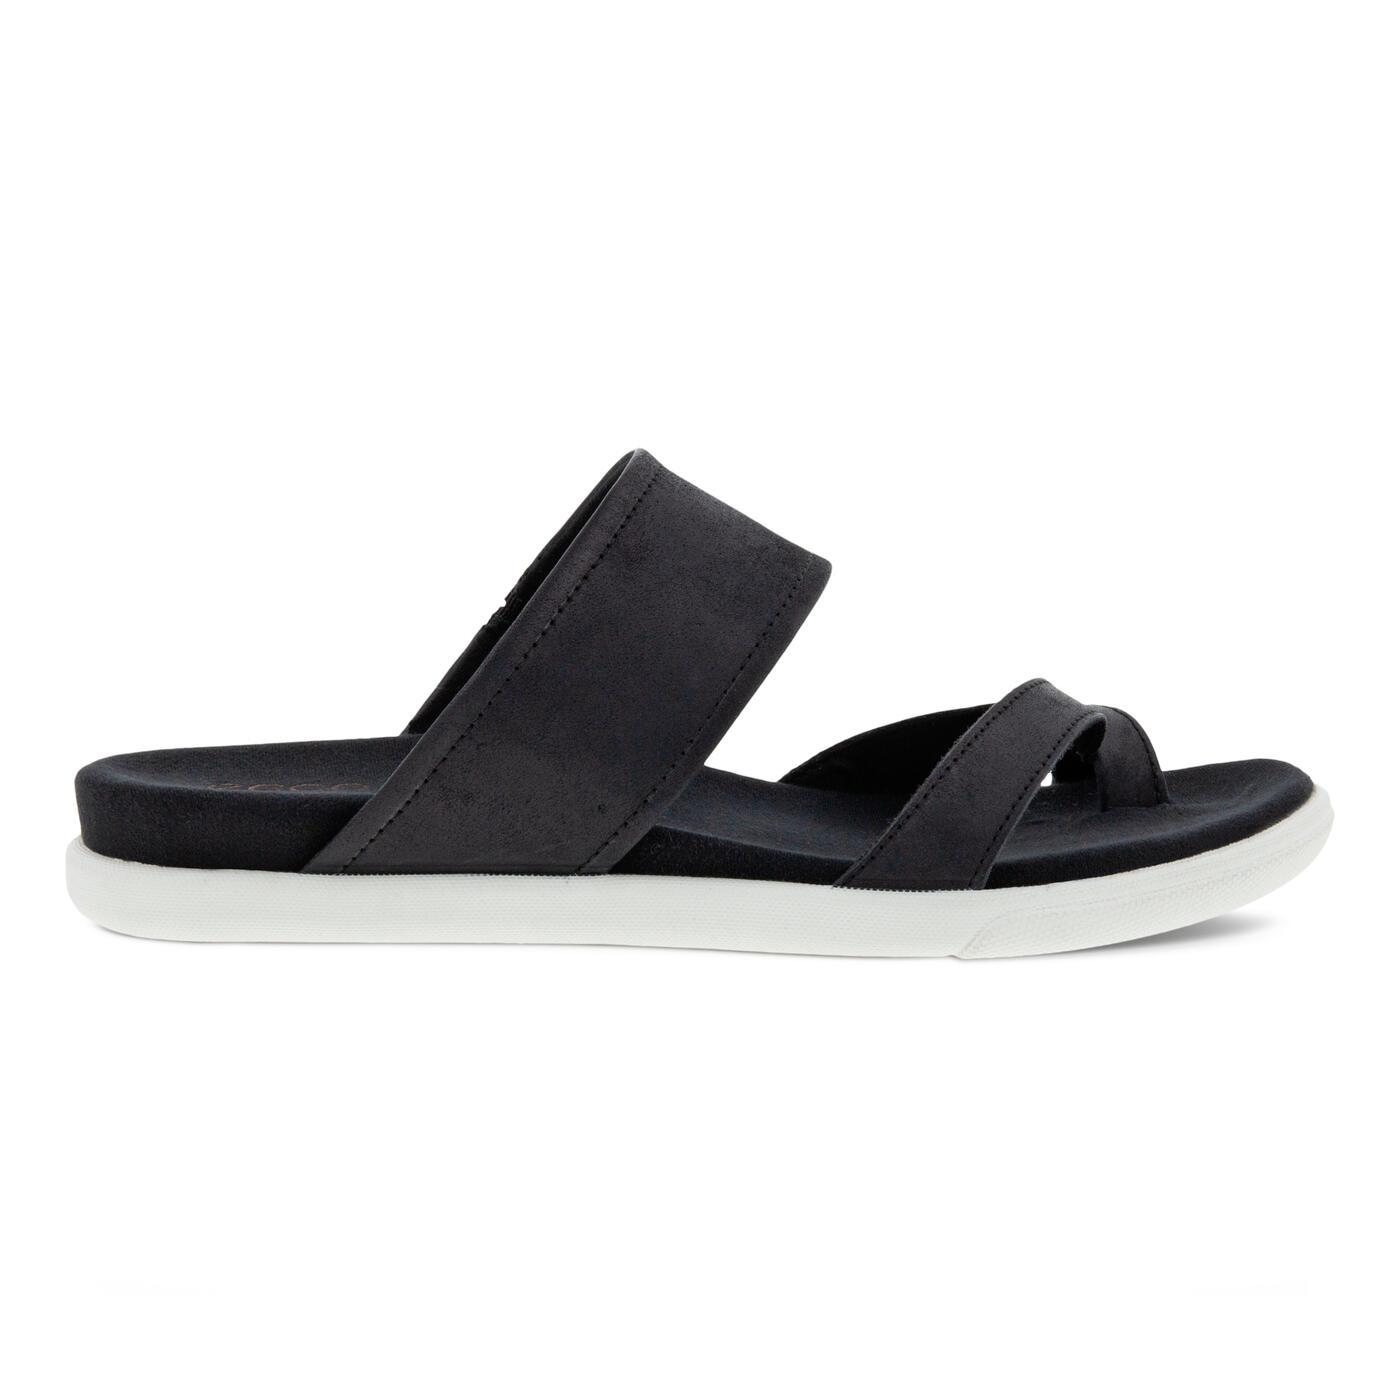 Ecco Damara Sandal Slide Size in Black | Lyst